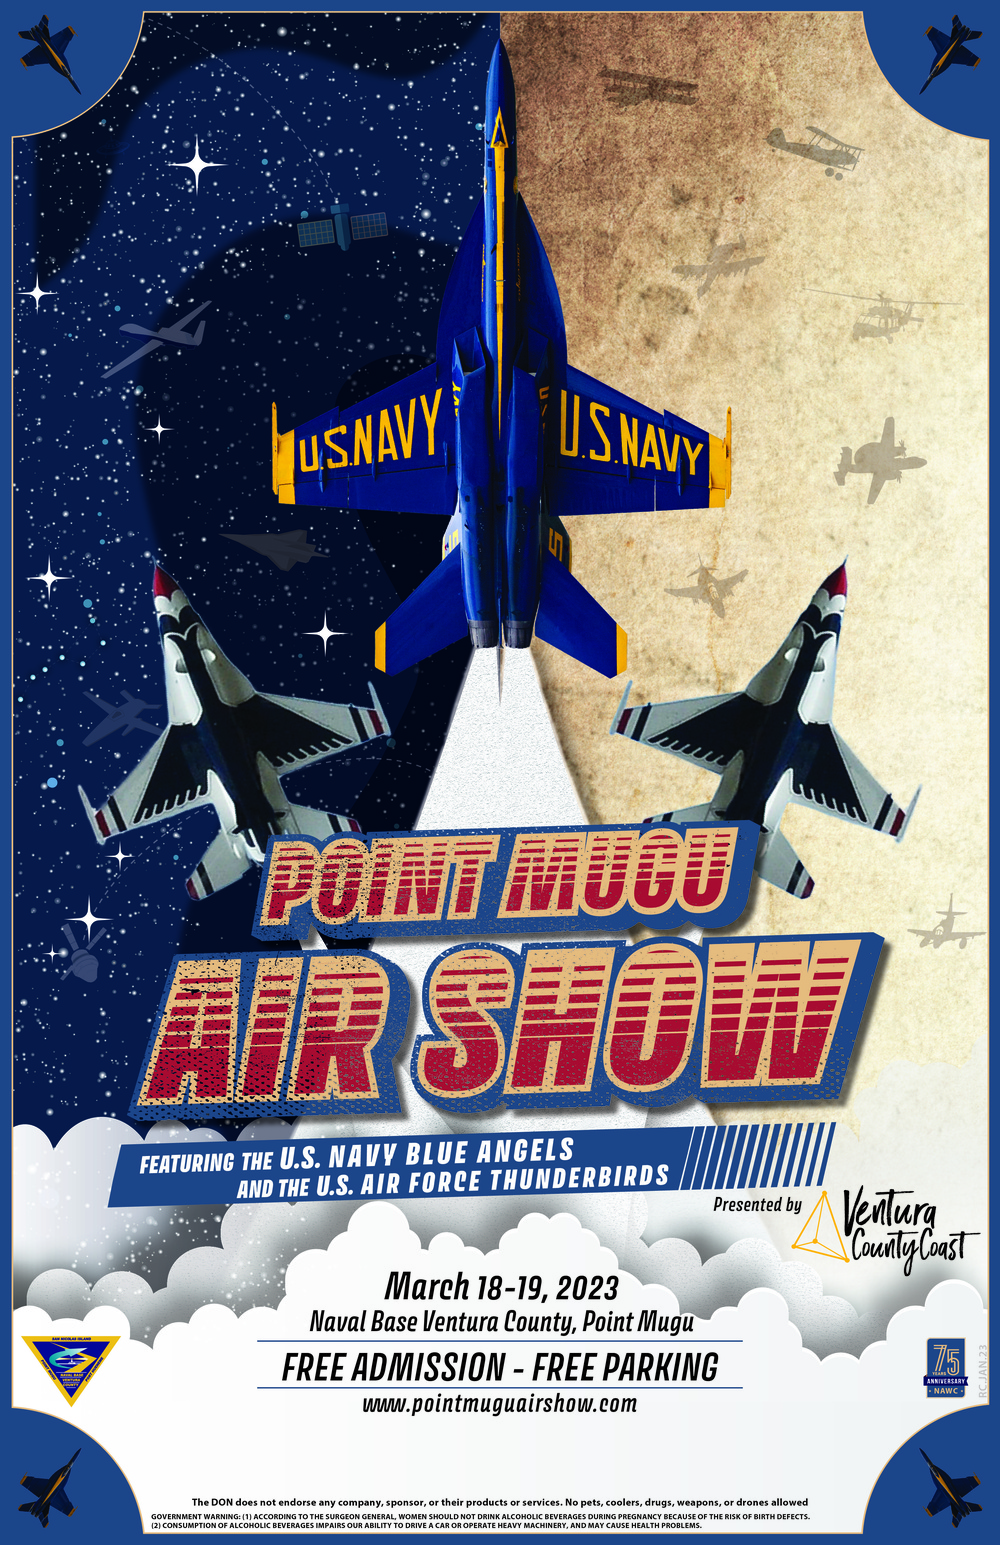 DVIDS - News - Blue Angels, Thunderbirds to co-headline Point Mugu Air Show